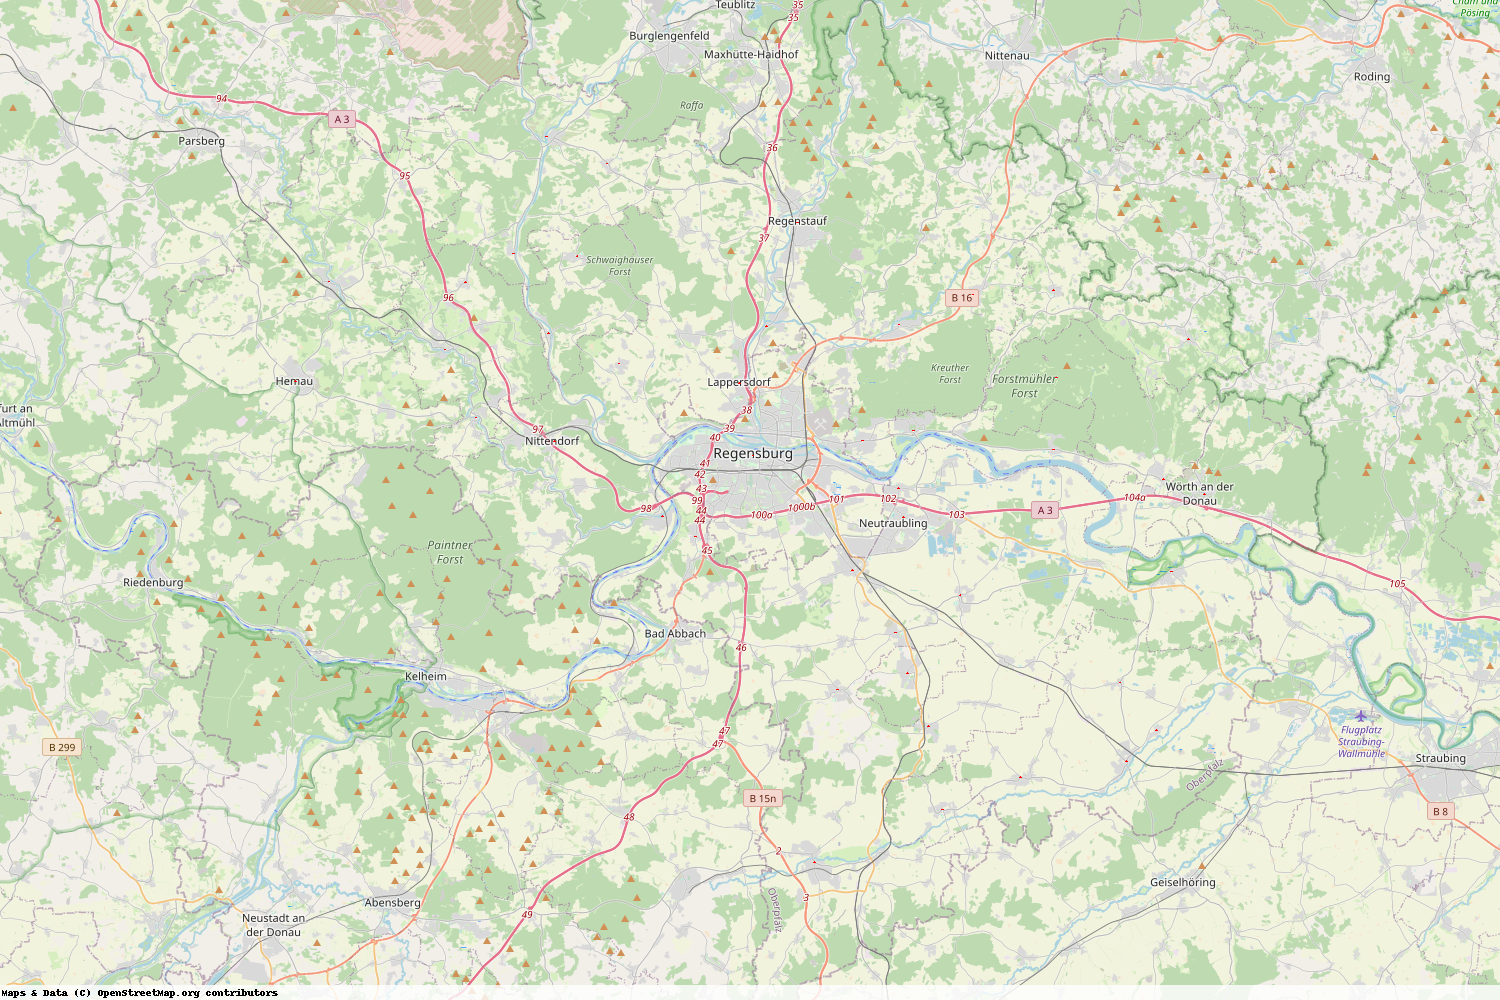 Ist gerade Stromausfall in Bayern - Regensburg?